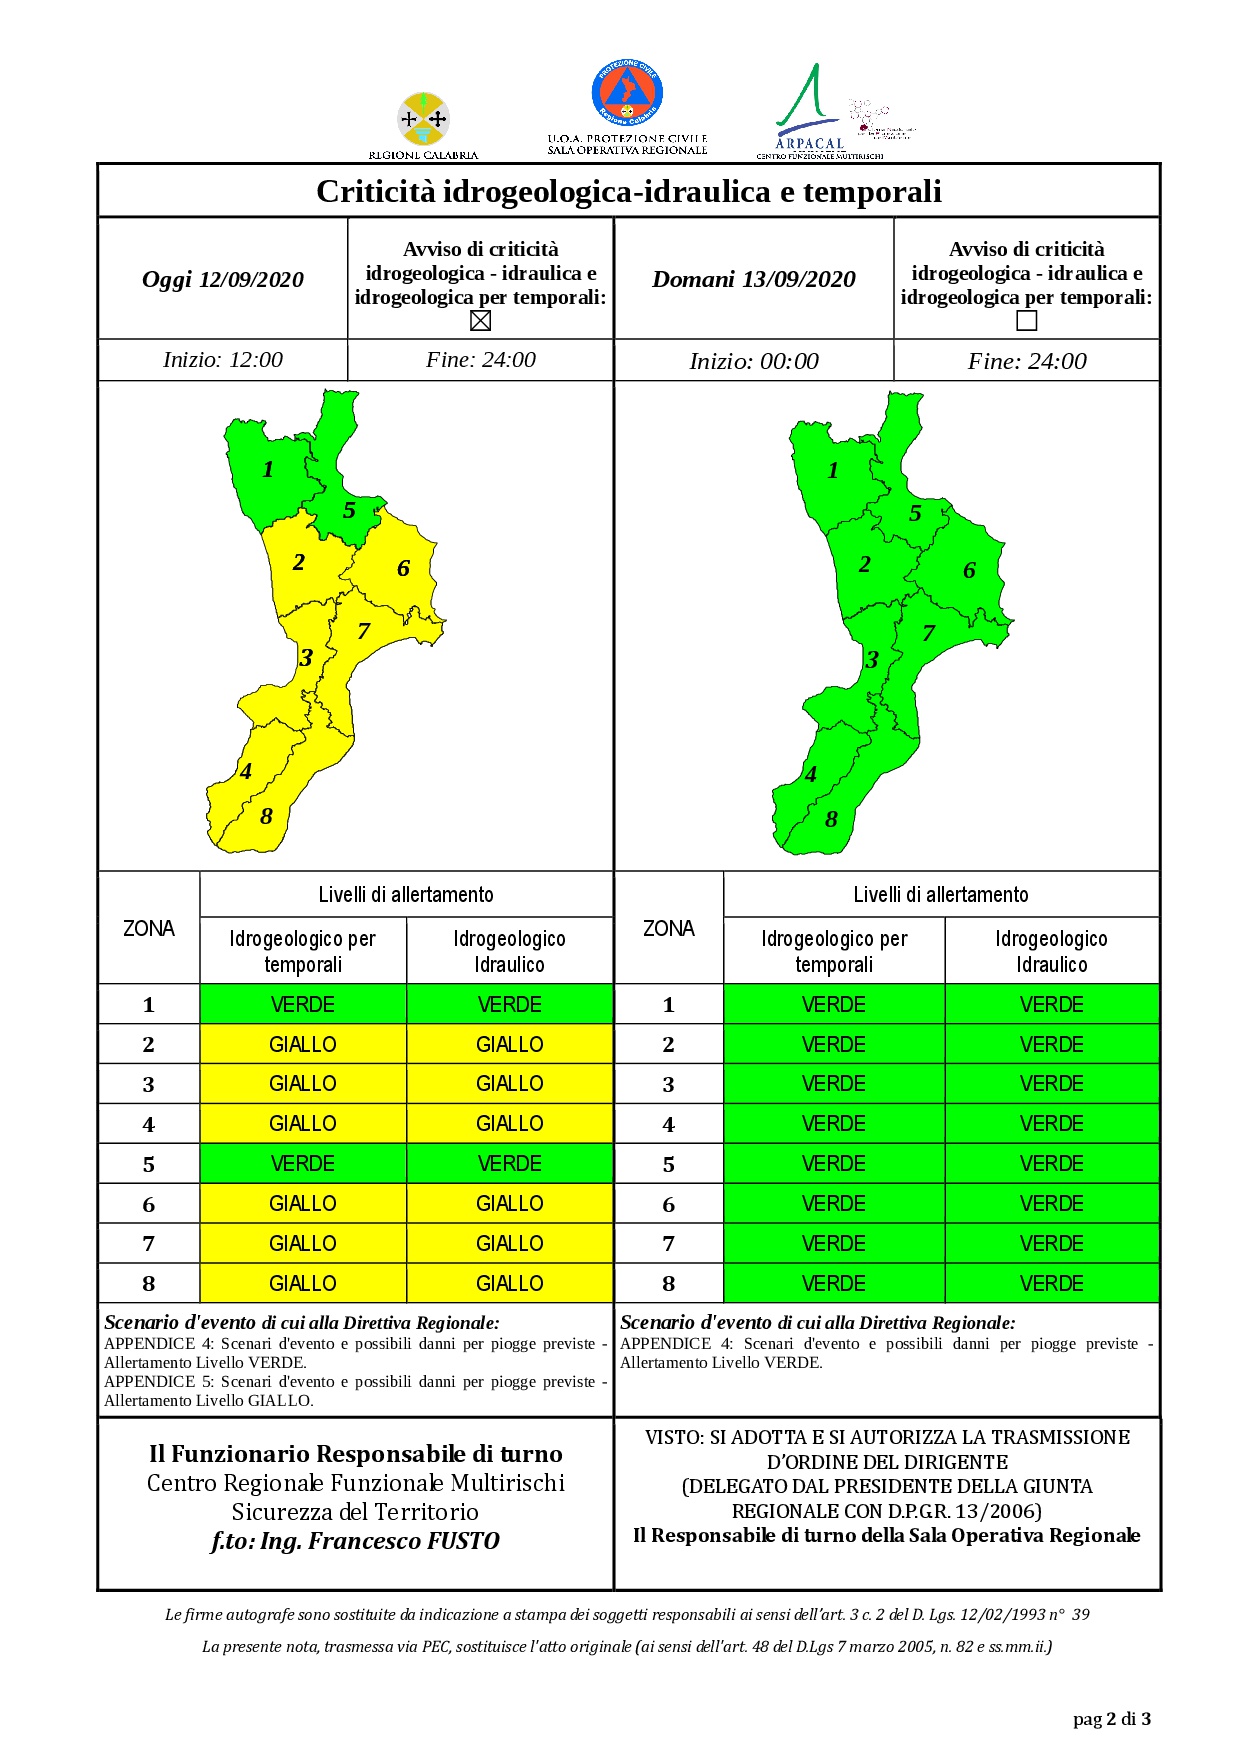 Criticità idrogeologica-idraulica e temporali in Calabria 12-09-2020